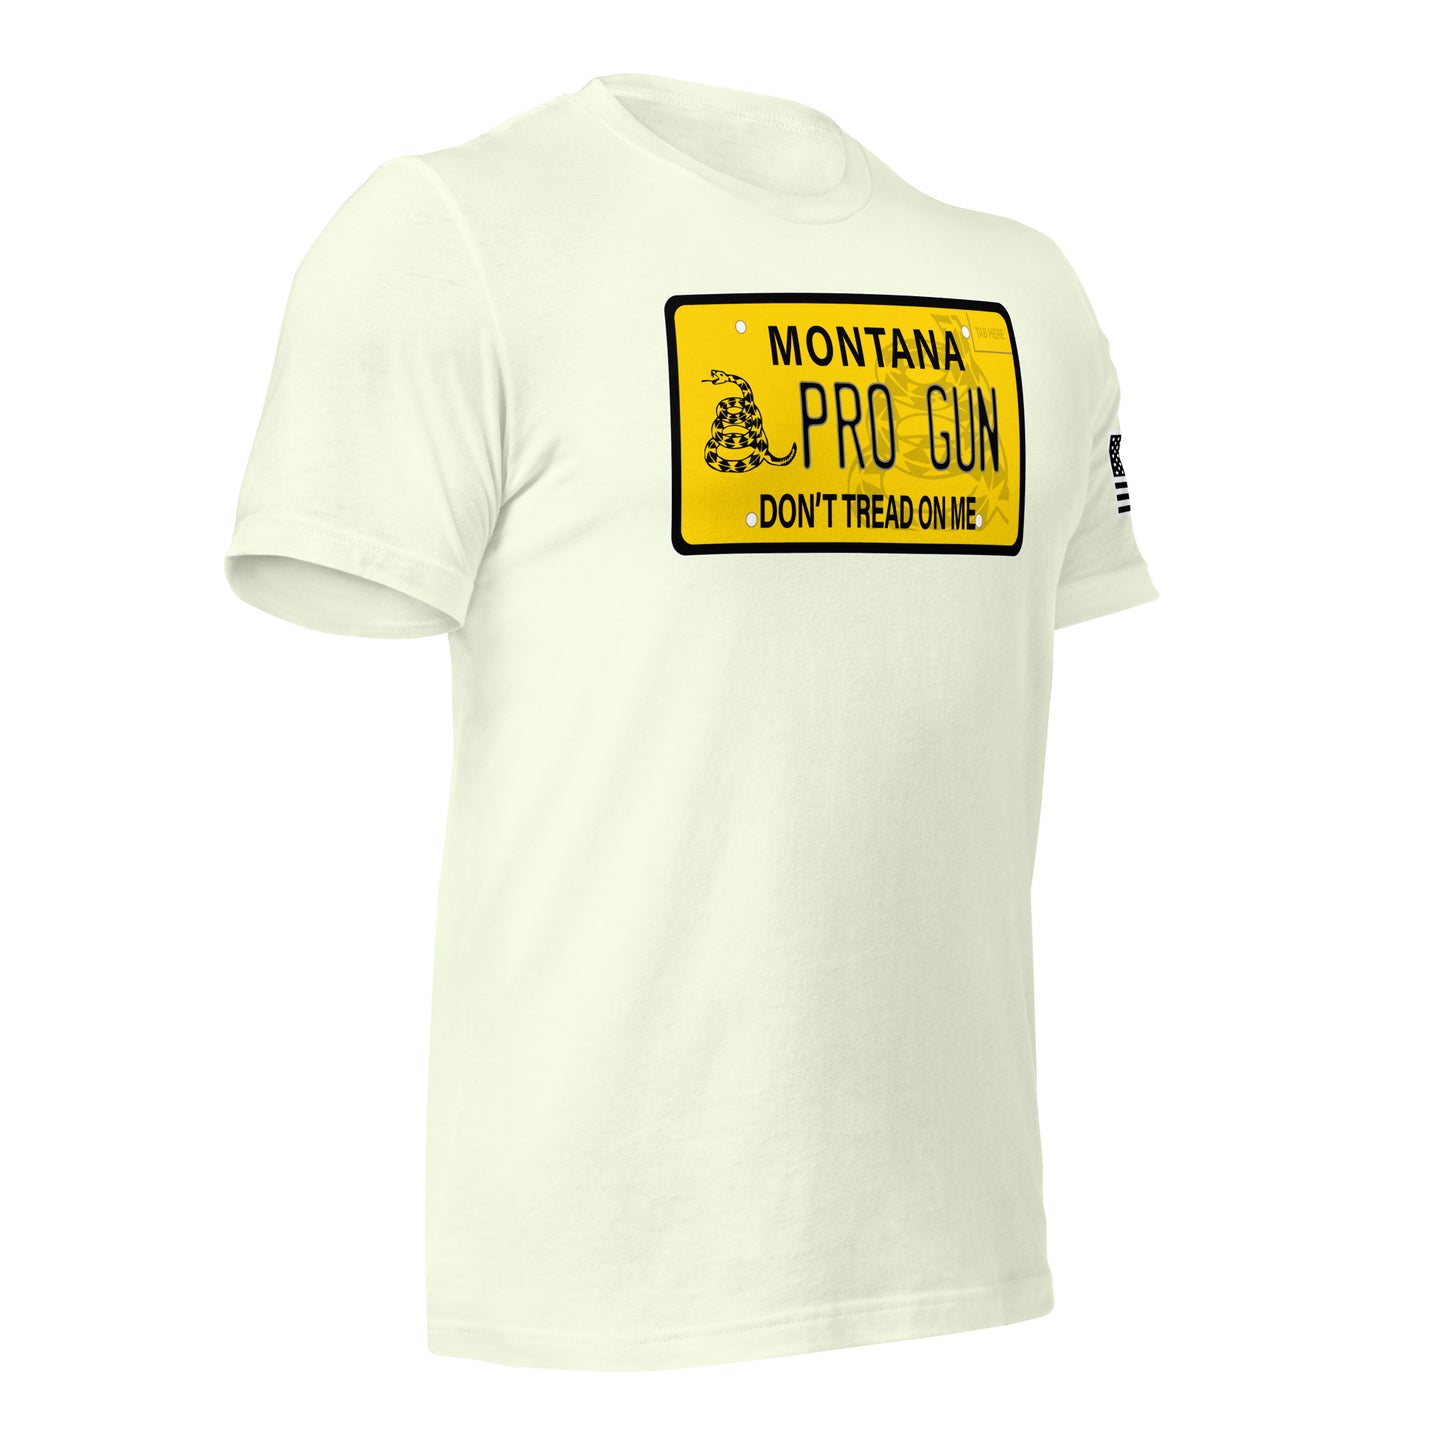 MONTANA DON'T TREAD ON ME PLATE - PRO GUN - BELLA+CANVAS - Unisex t-shirt